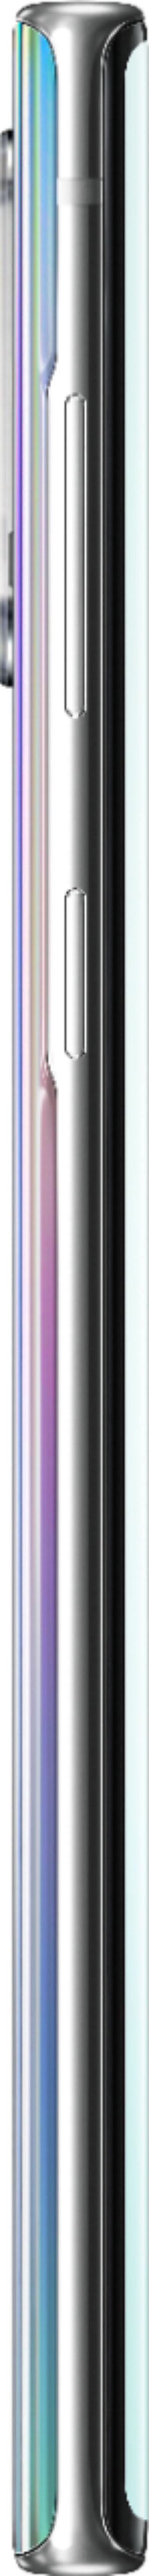 Galaxy Note10 256GB CPO (Unlocked) Phones - SM5N970UZKAXAA